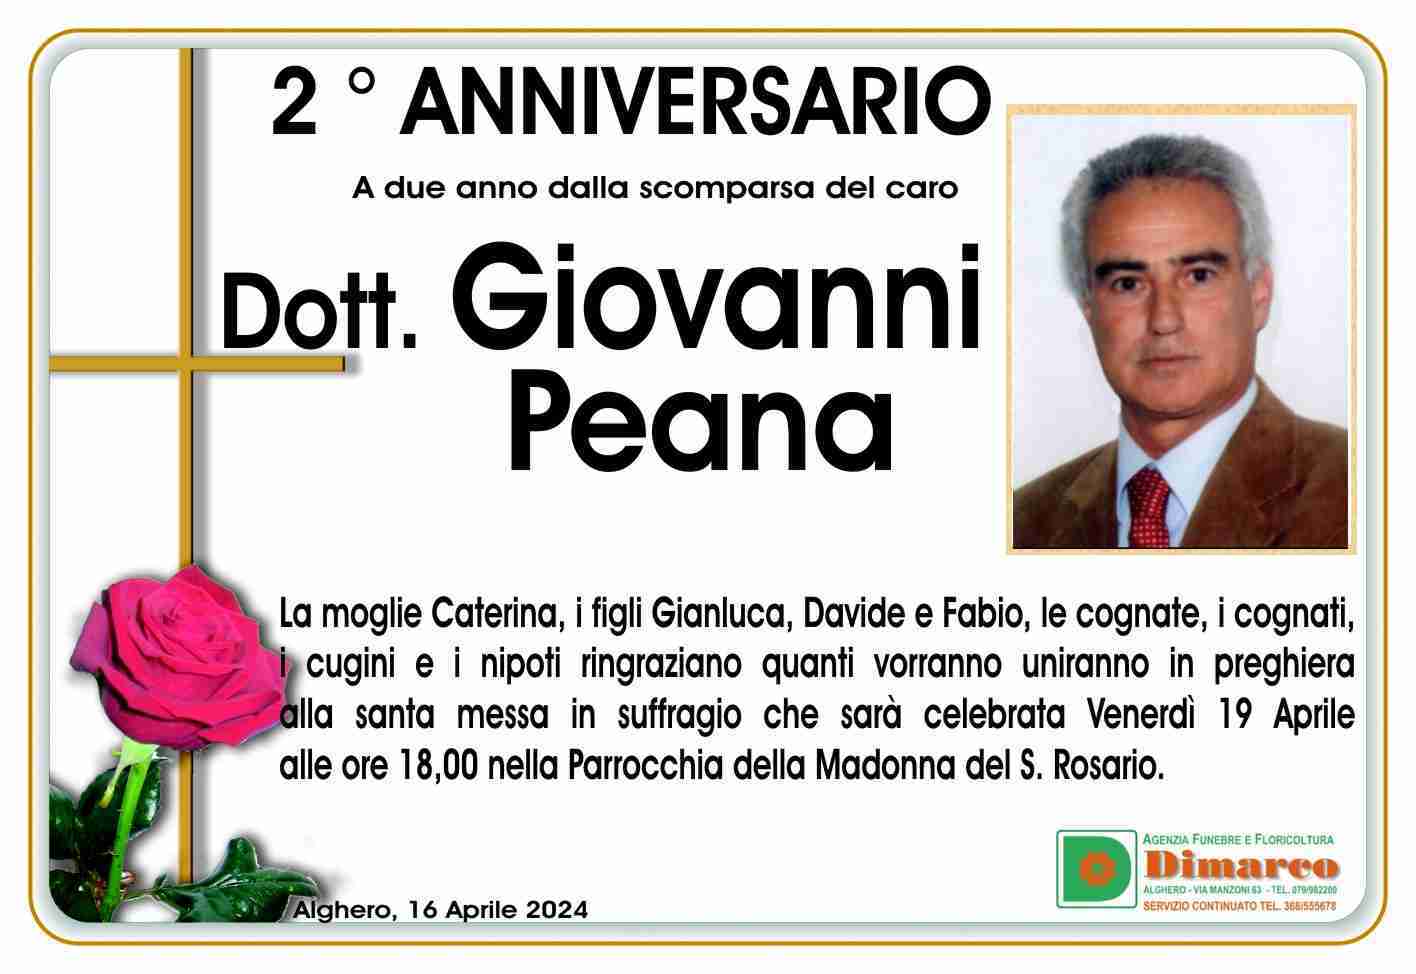 Giovanni Pietro Peana